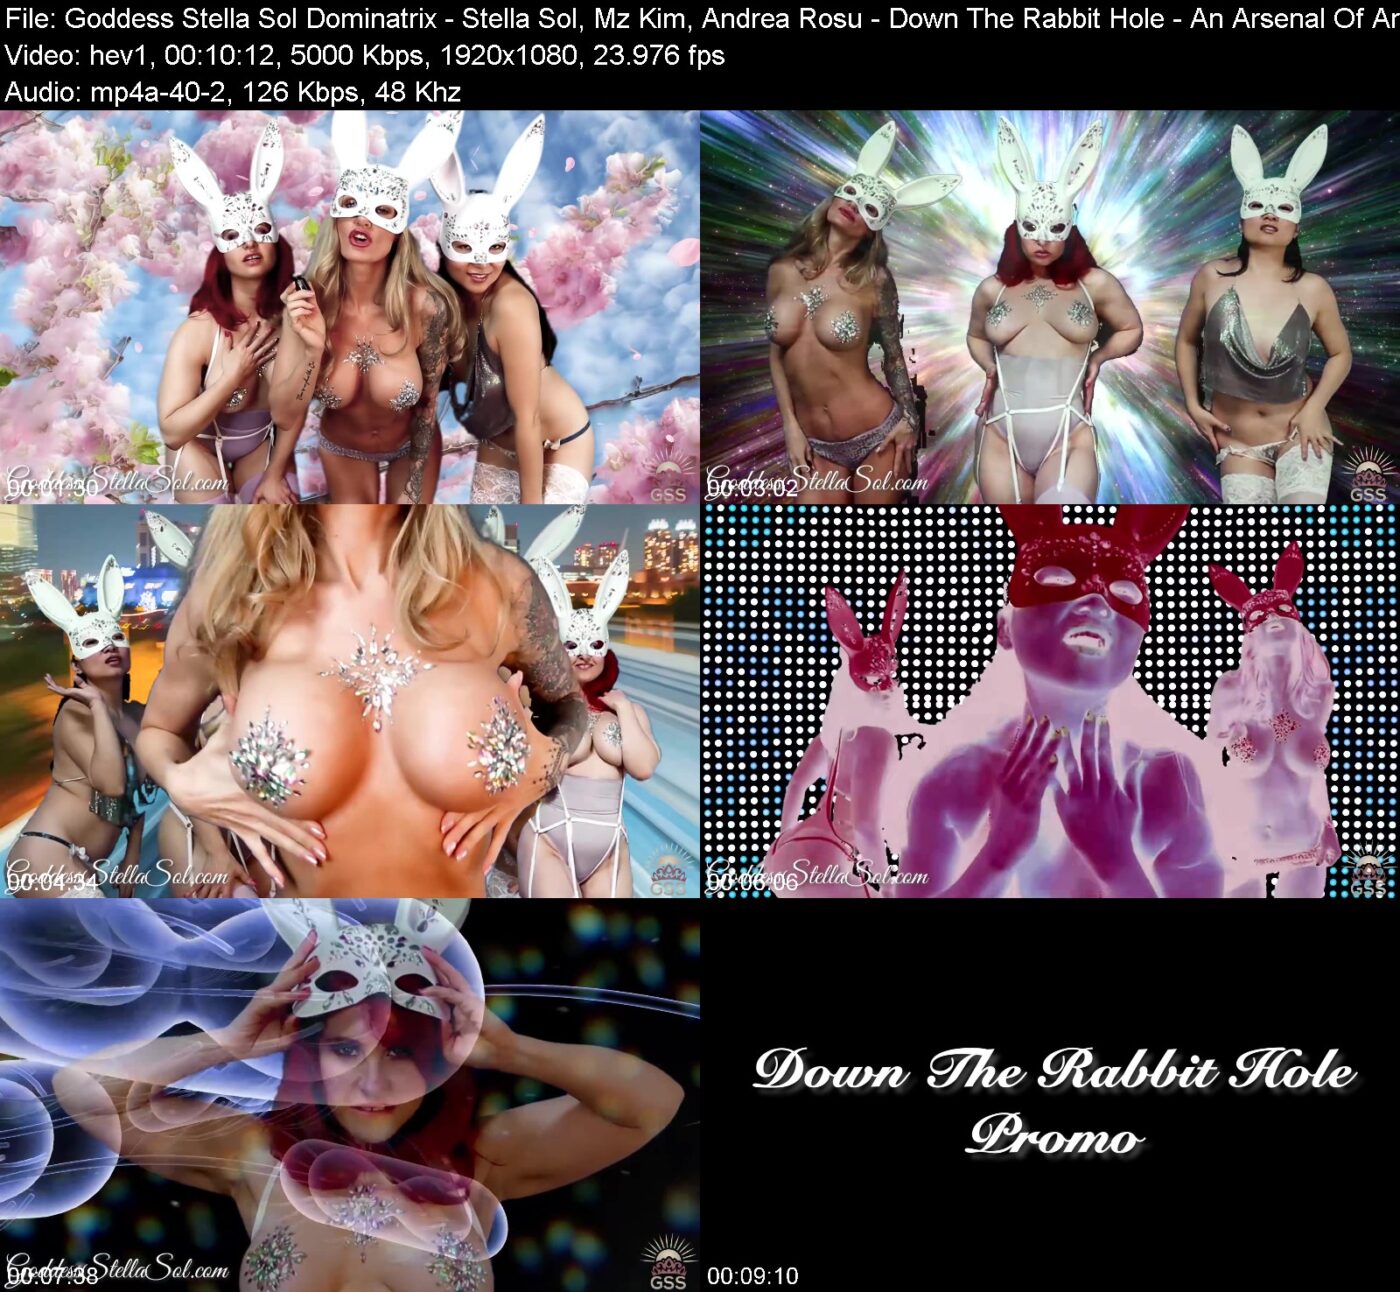 Goddess Stella Sol Dominatrix - Stella Sol, Mz Kim, Andrea Rosu - Down The Rabbit Hole - An Arsenal Of Aromatic Pleasures